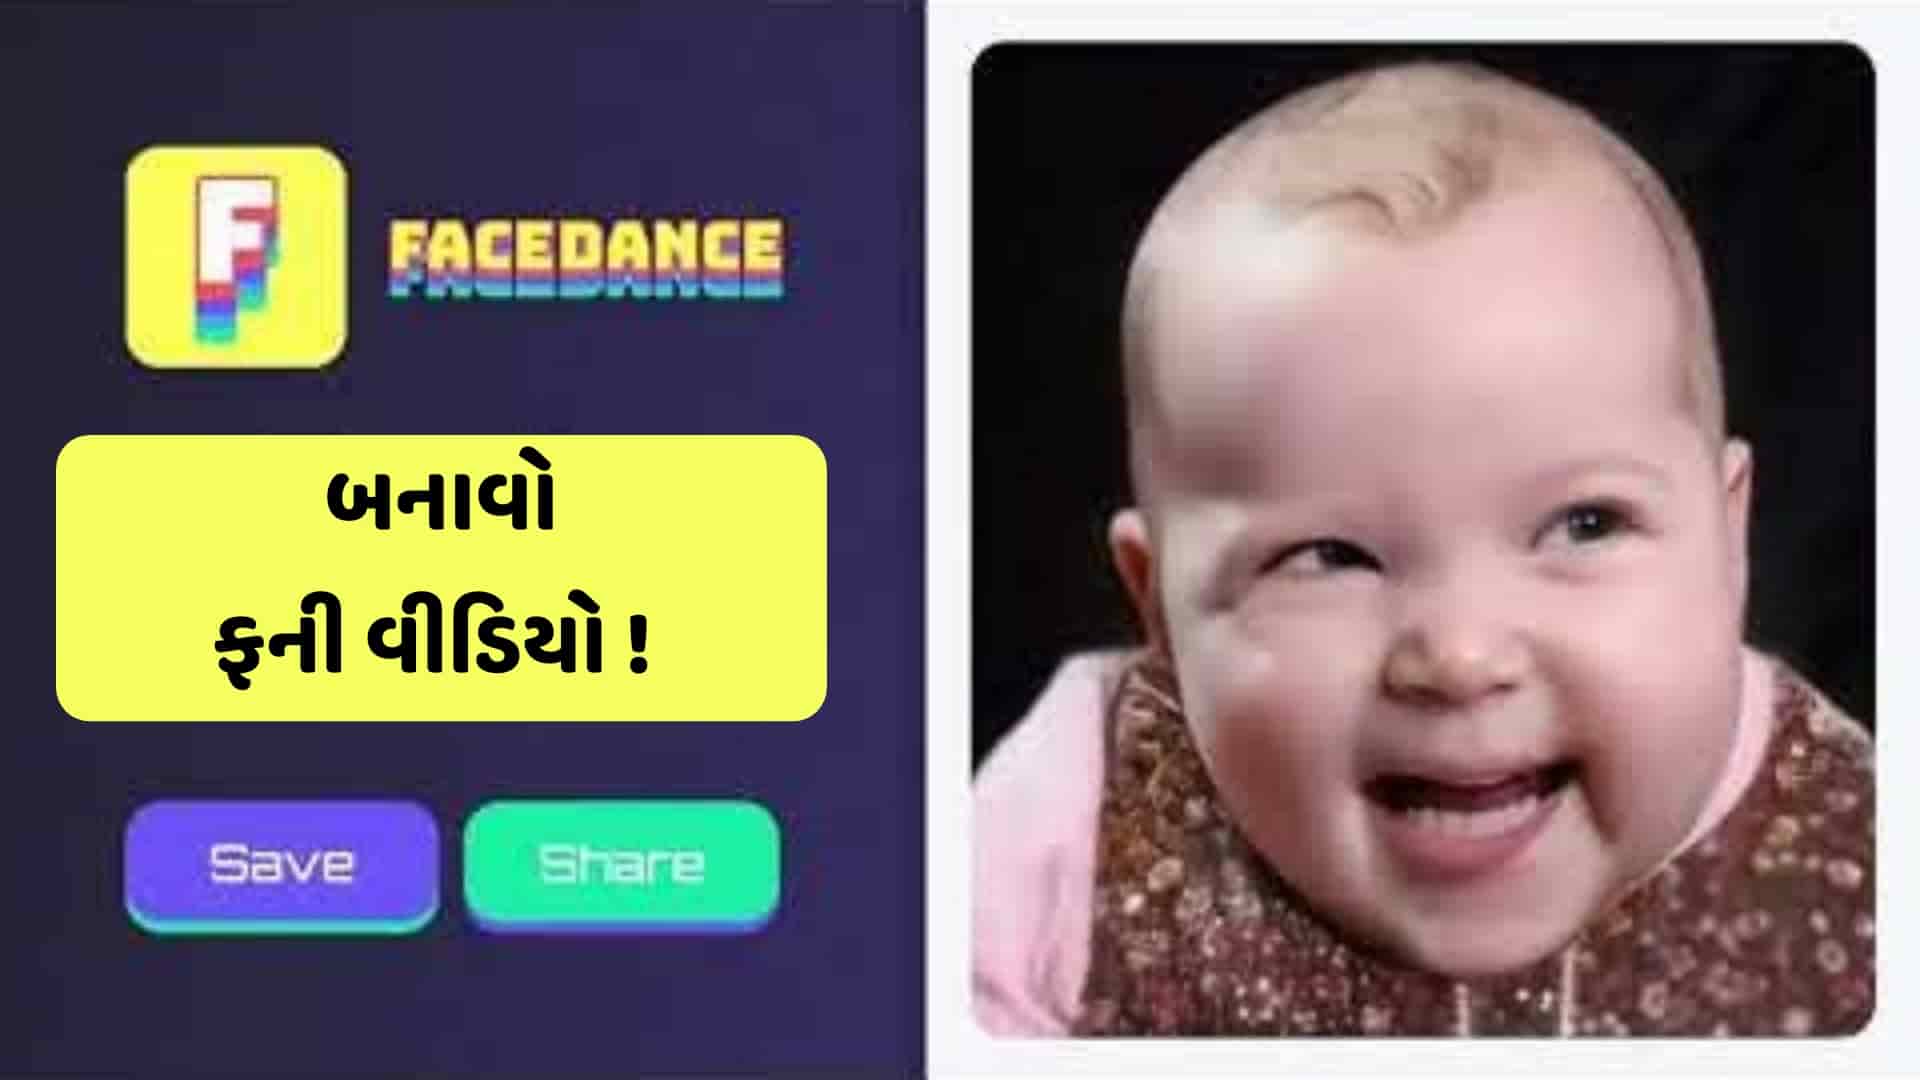 Face Dance App